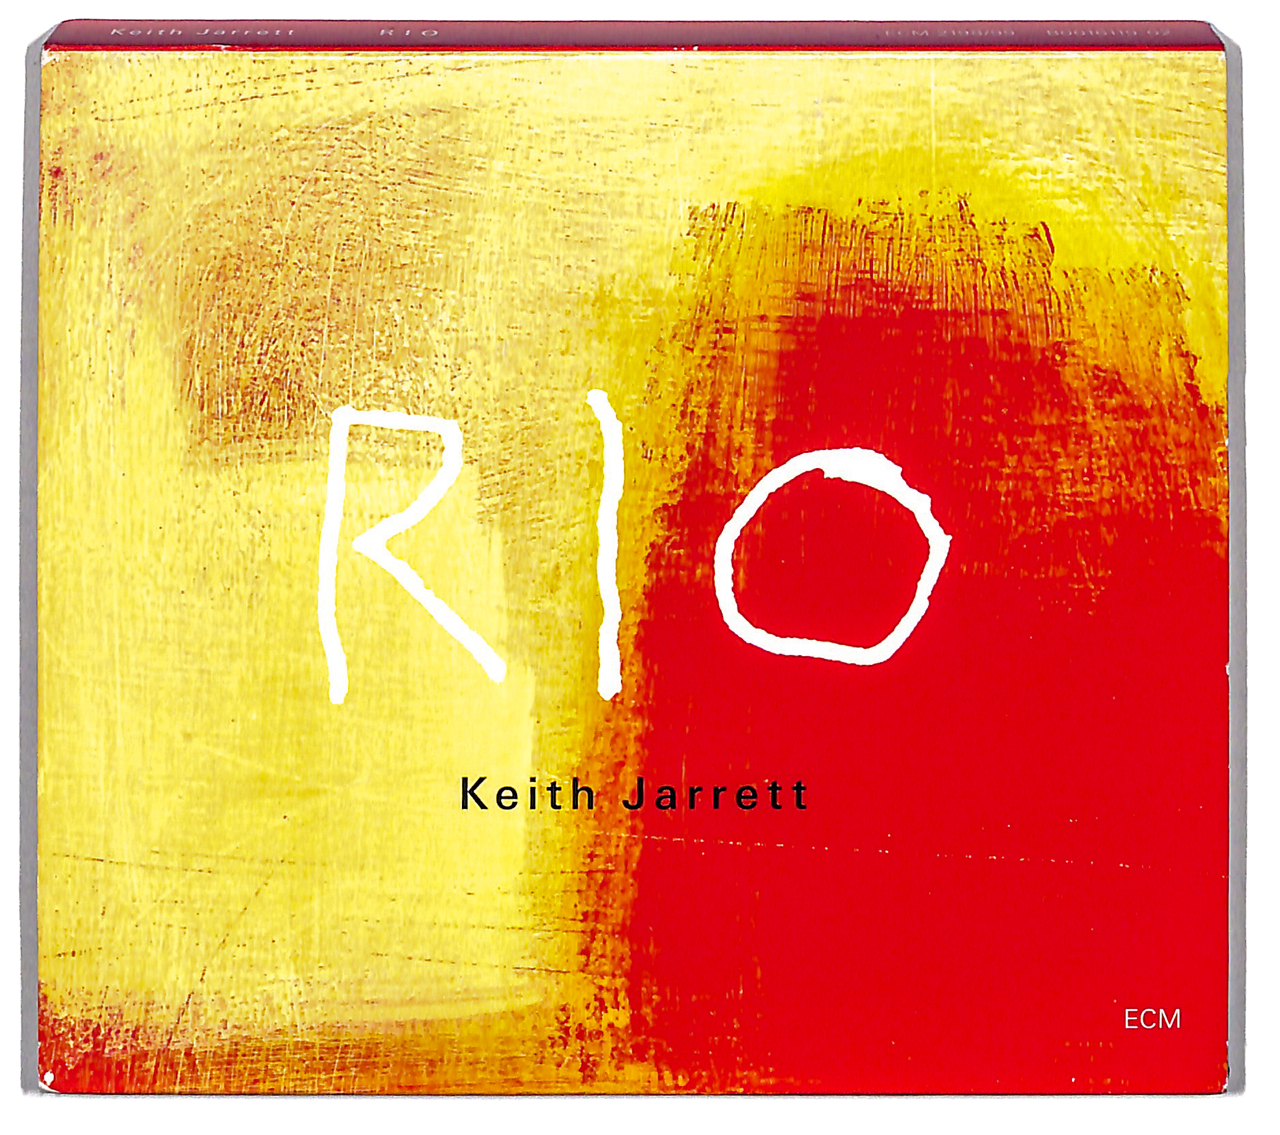 Keith Jarrett  RIO